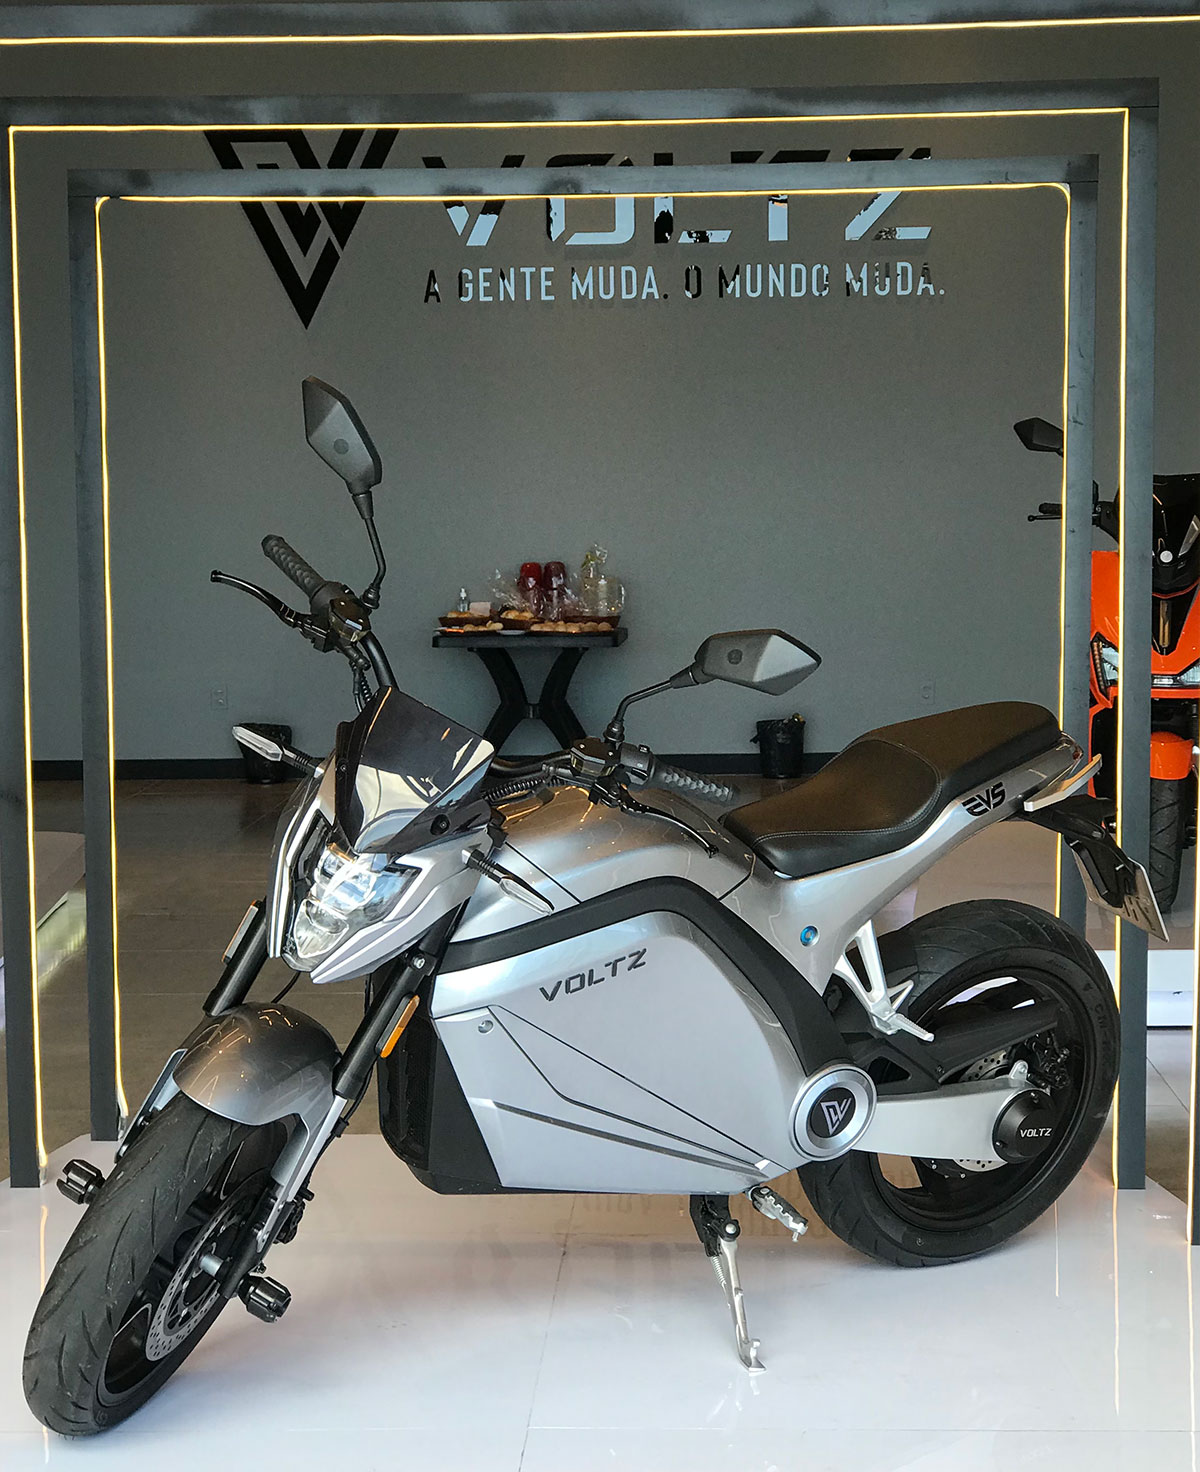 Voltz EVS Primeiras impressões - Moto elétrica 